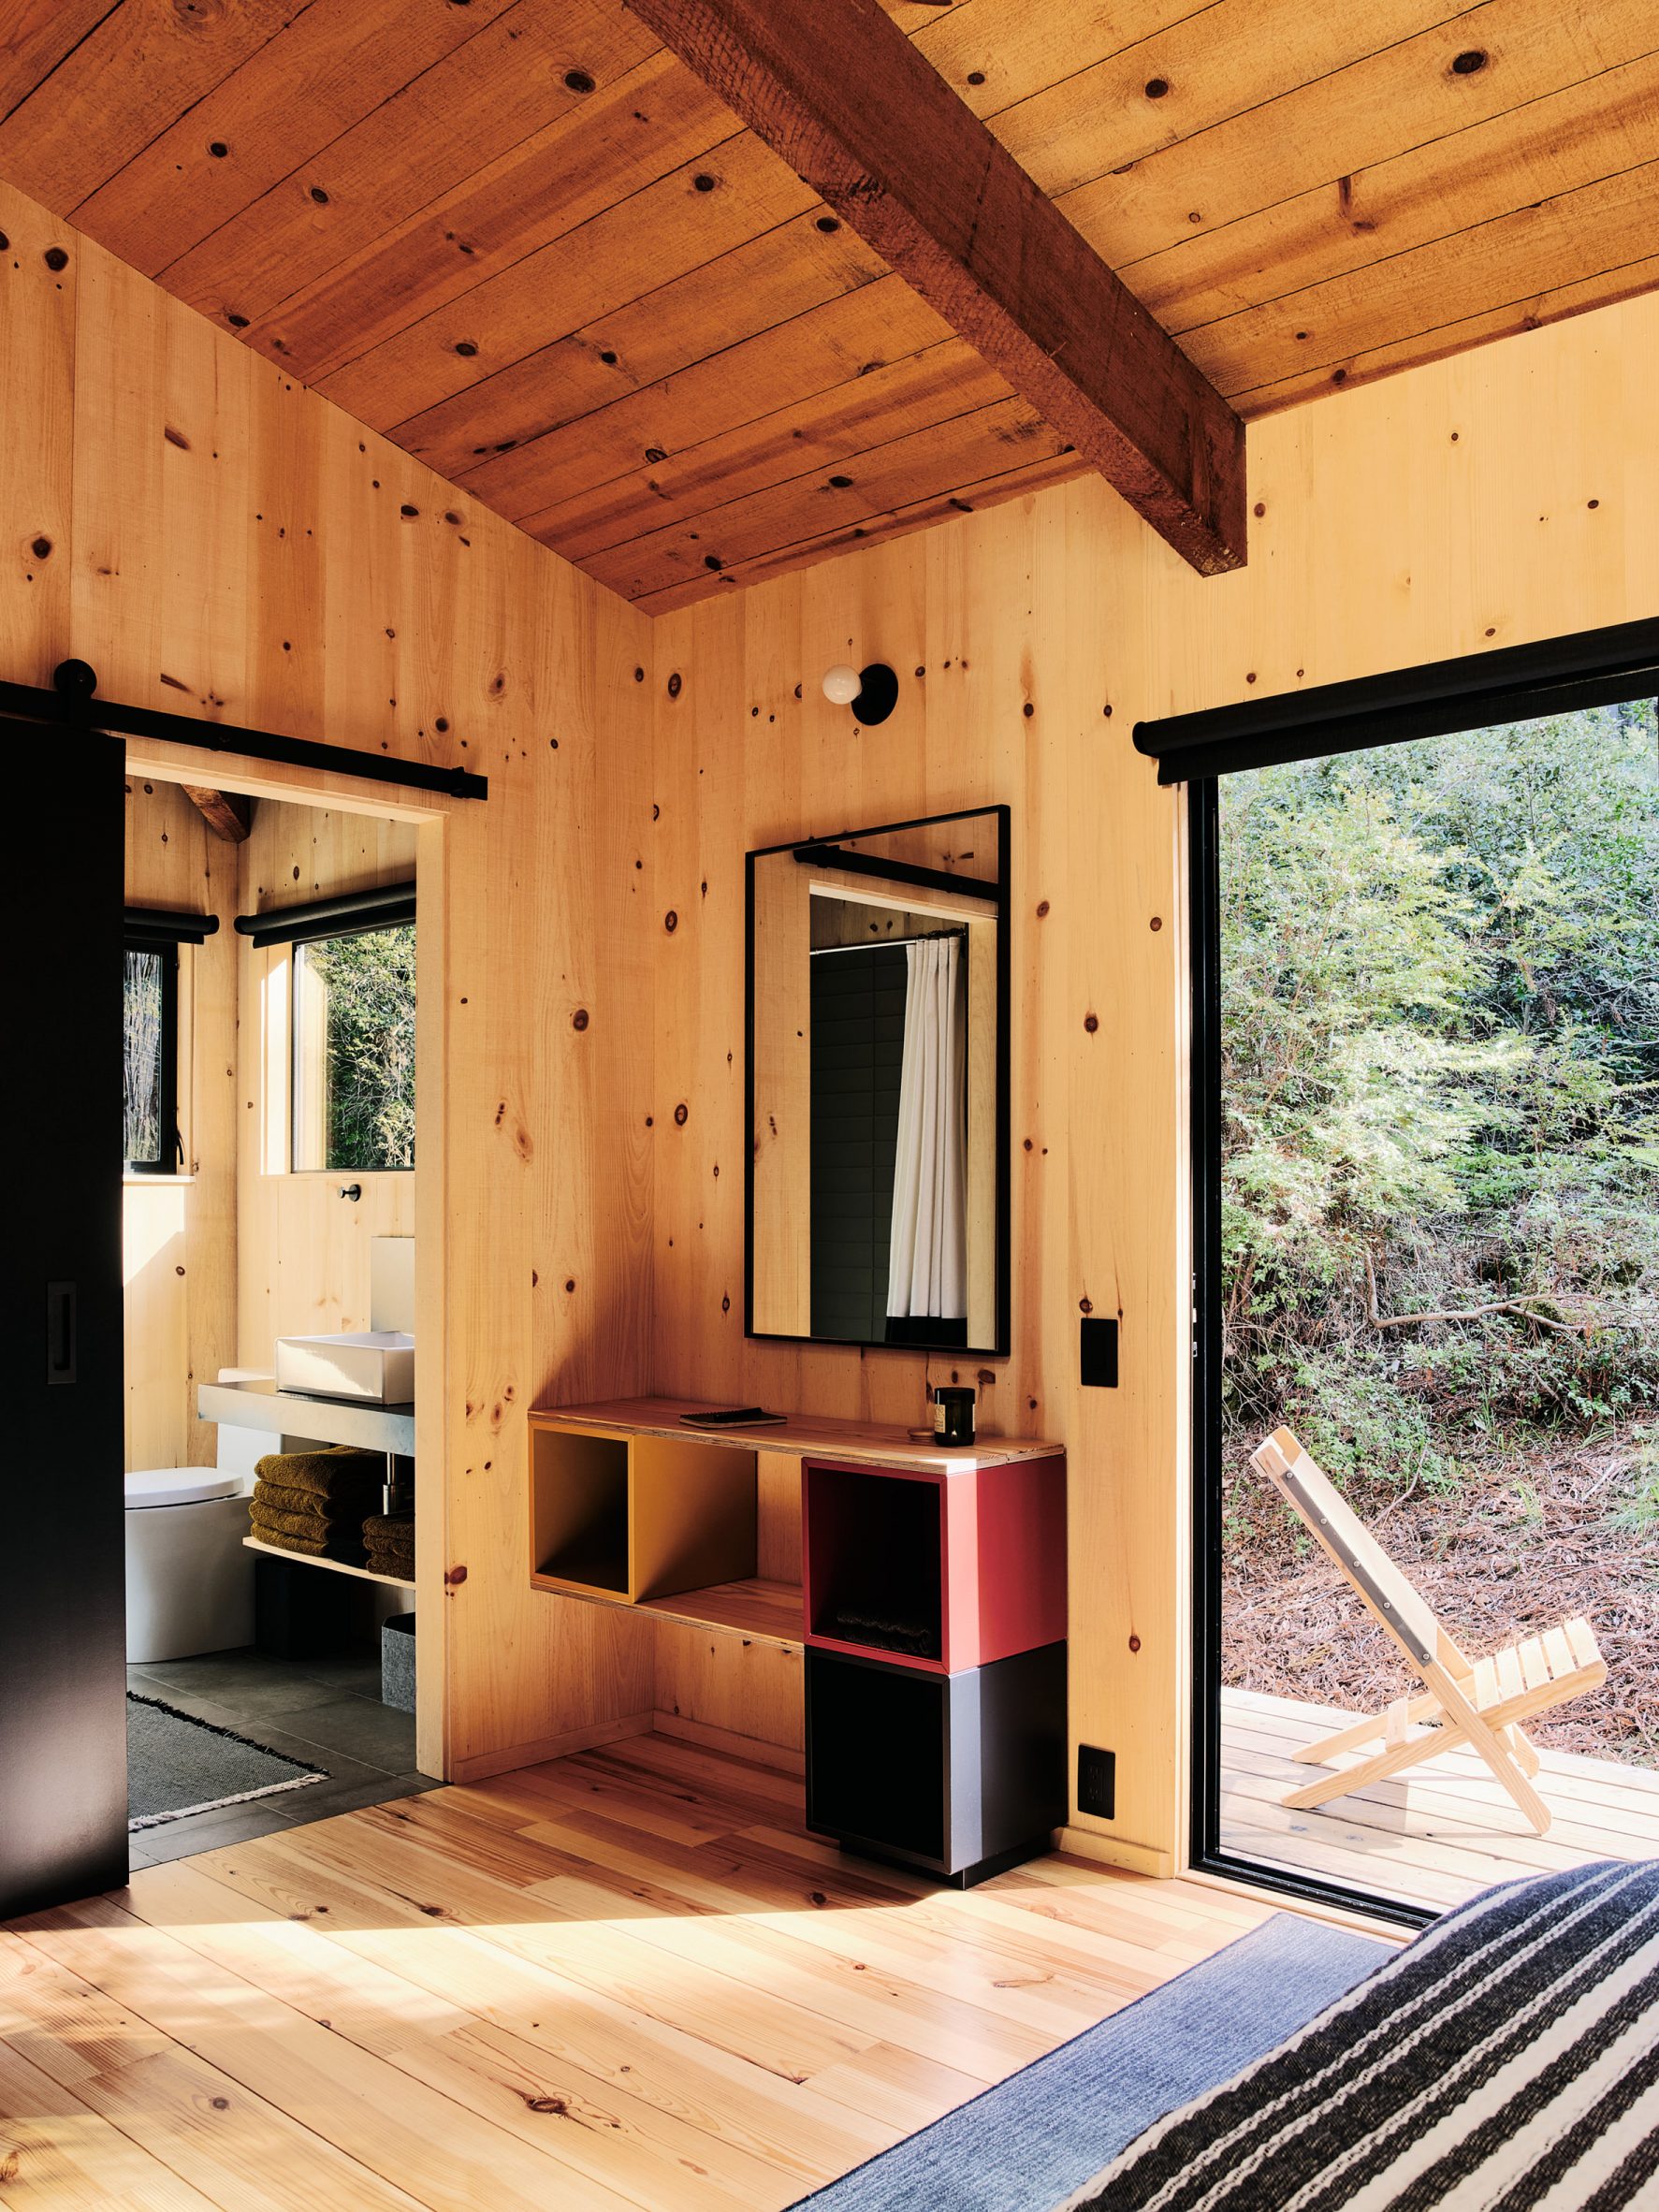 Wood-clad interior by Joanne Koch